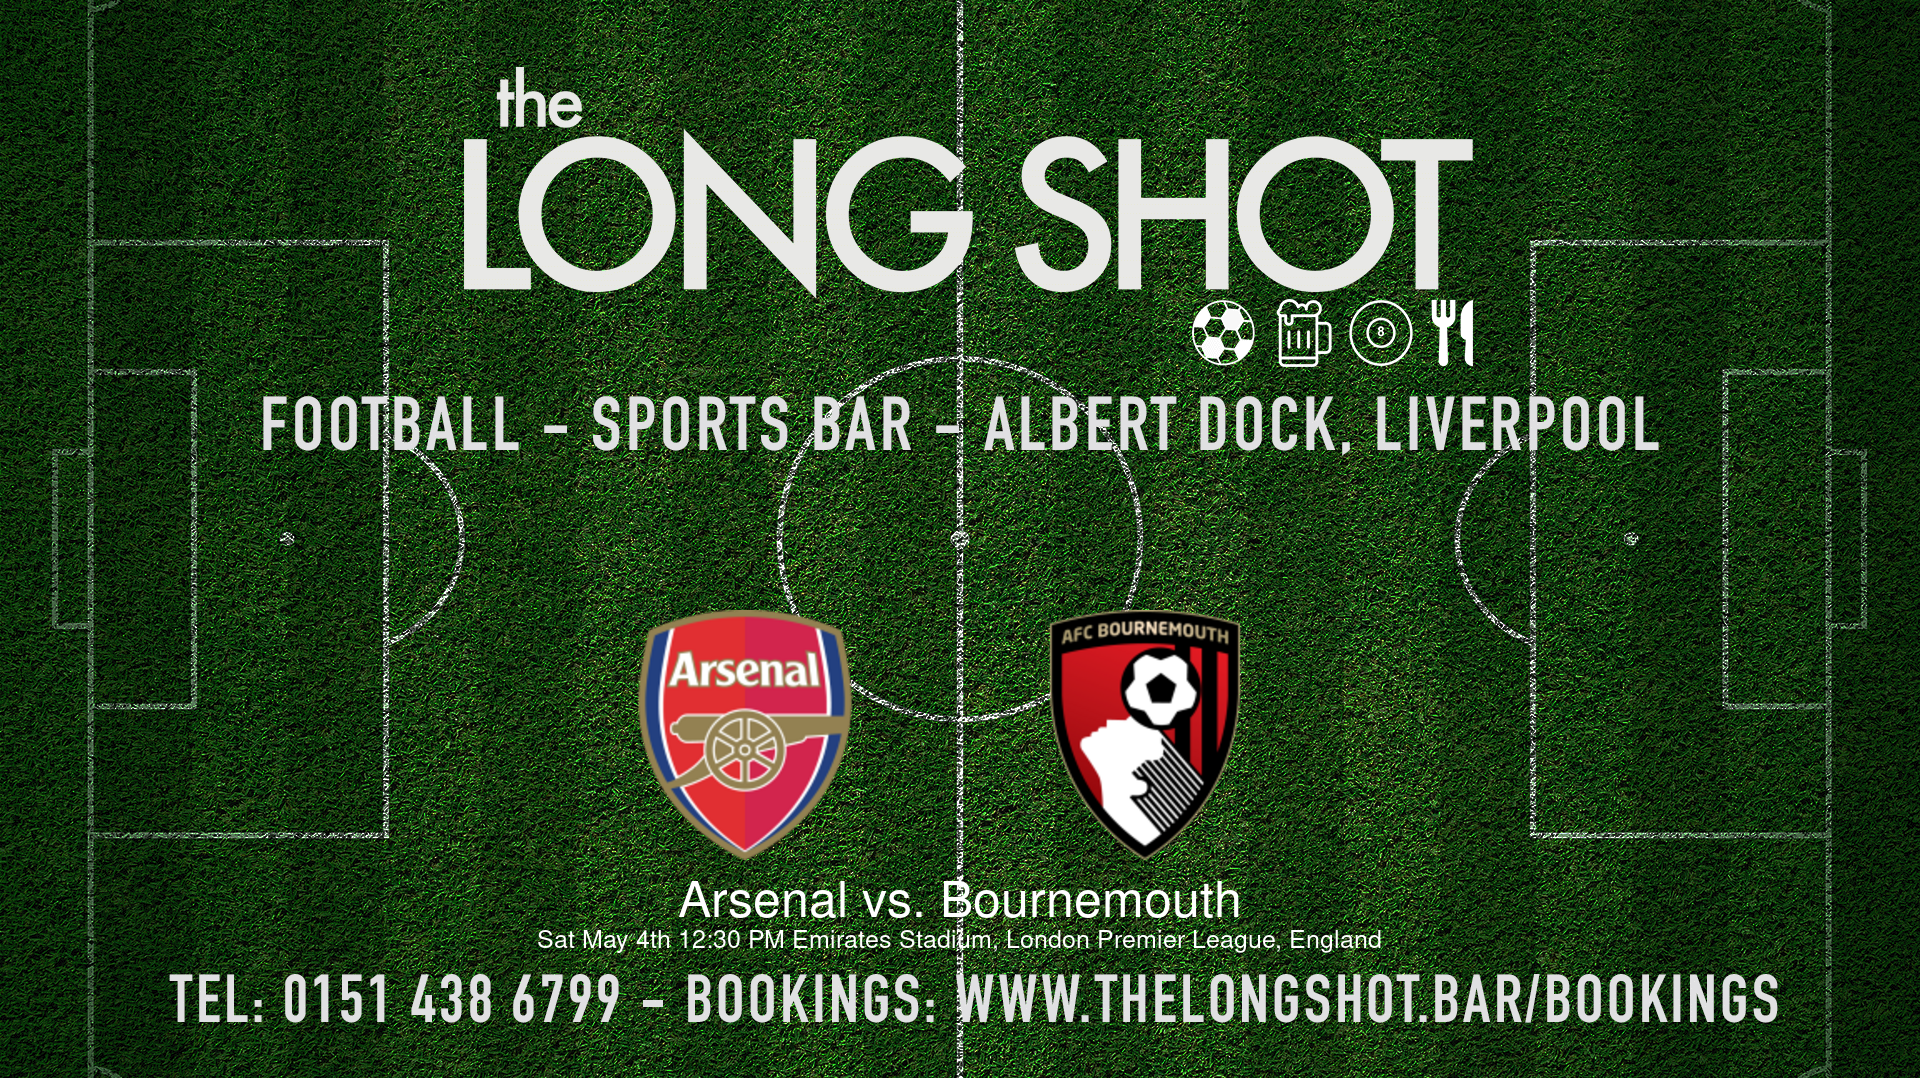 Event image - Arsenal vs. Bournemouth